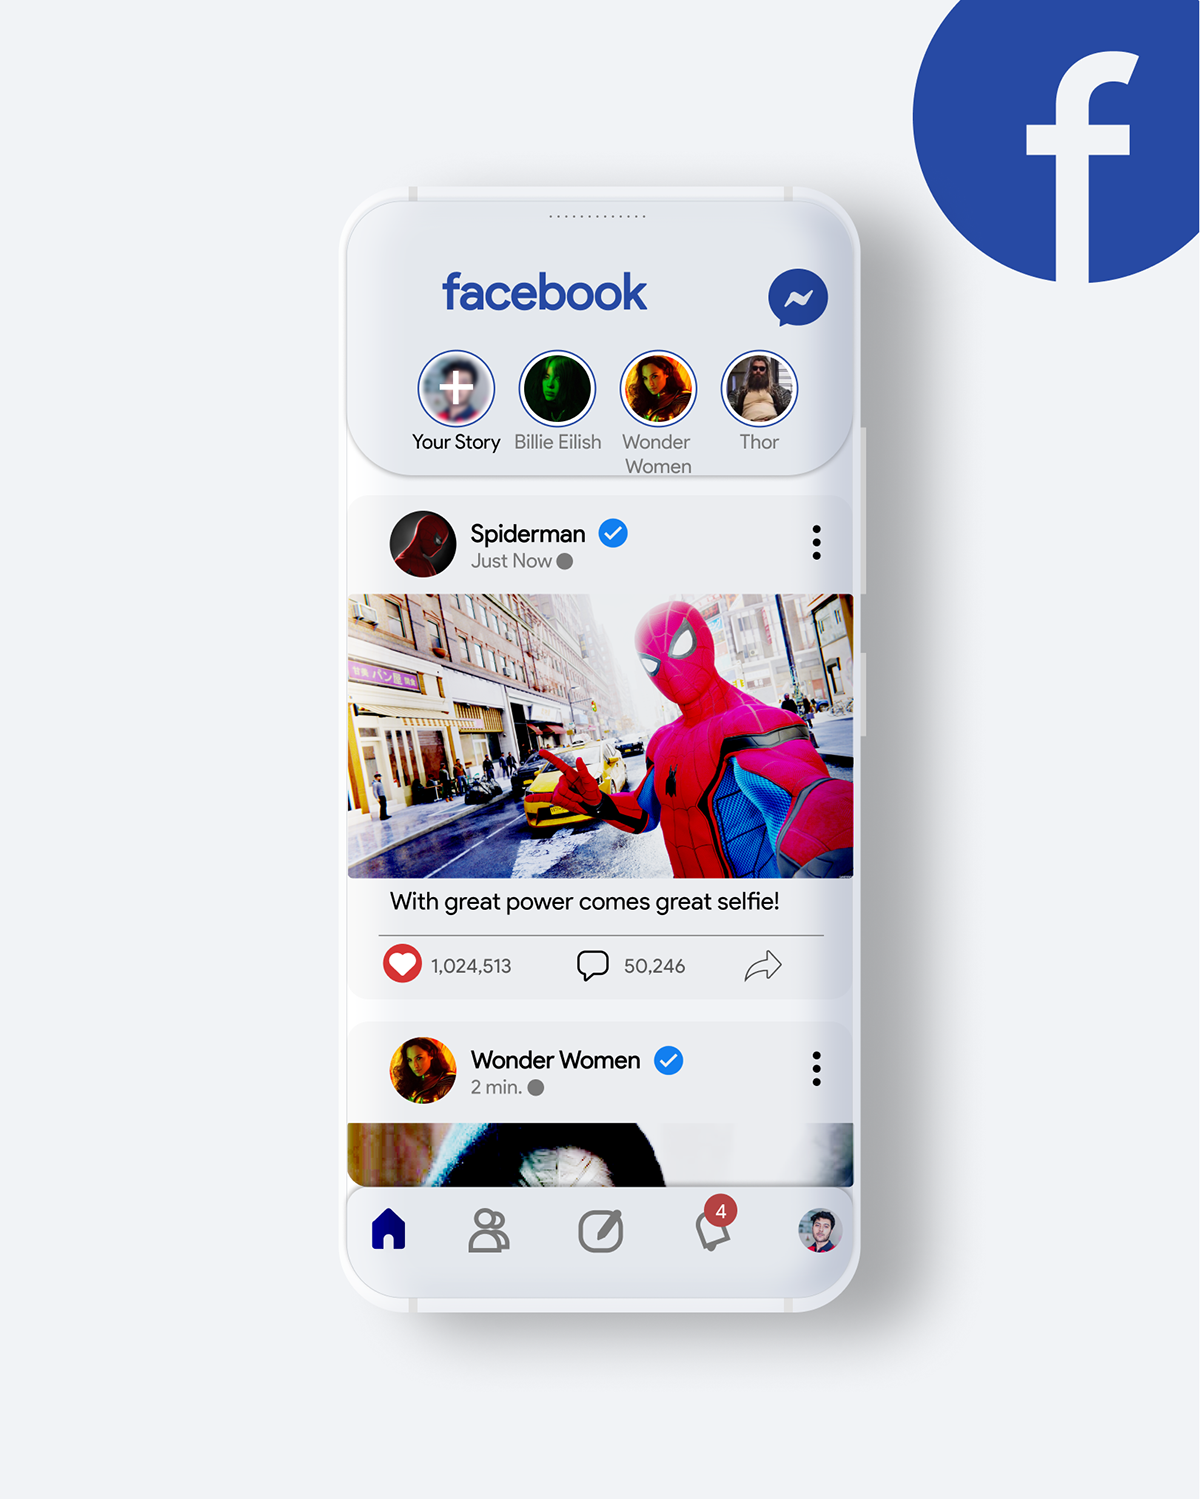 Facebook main screen redesigned